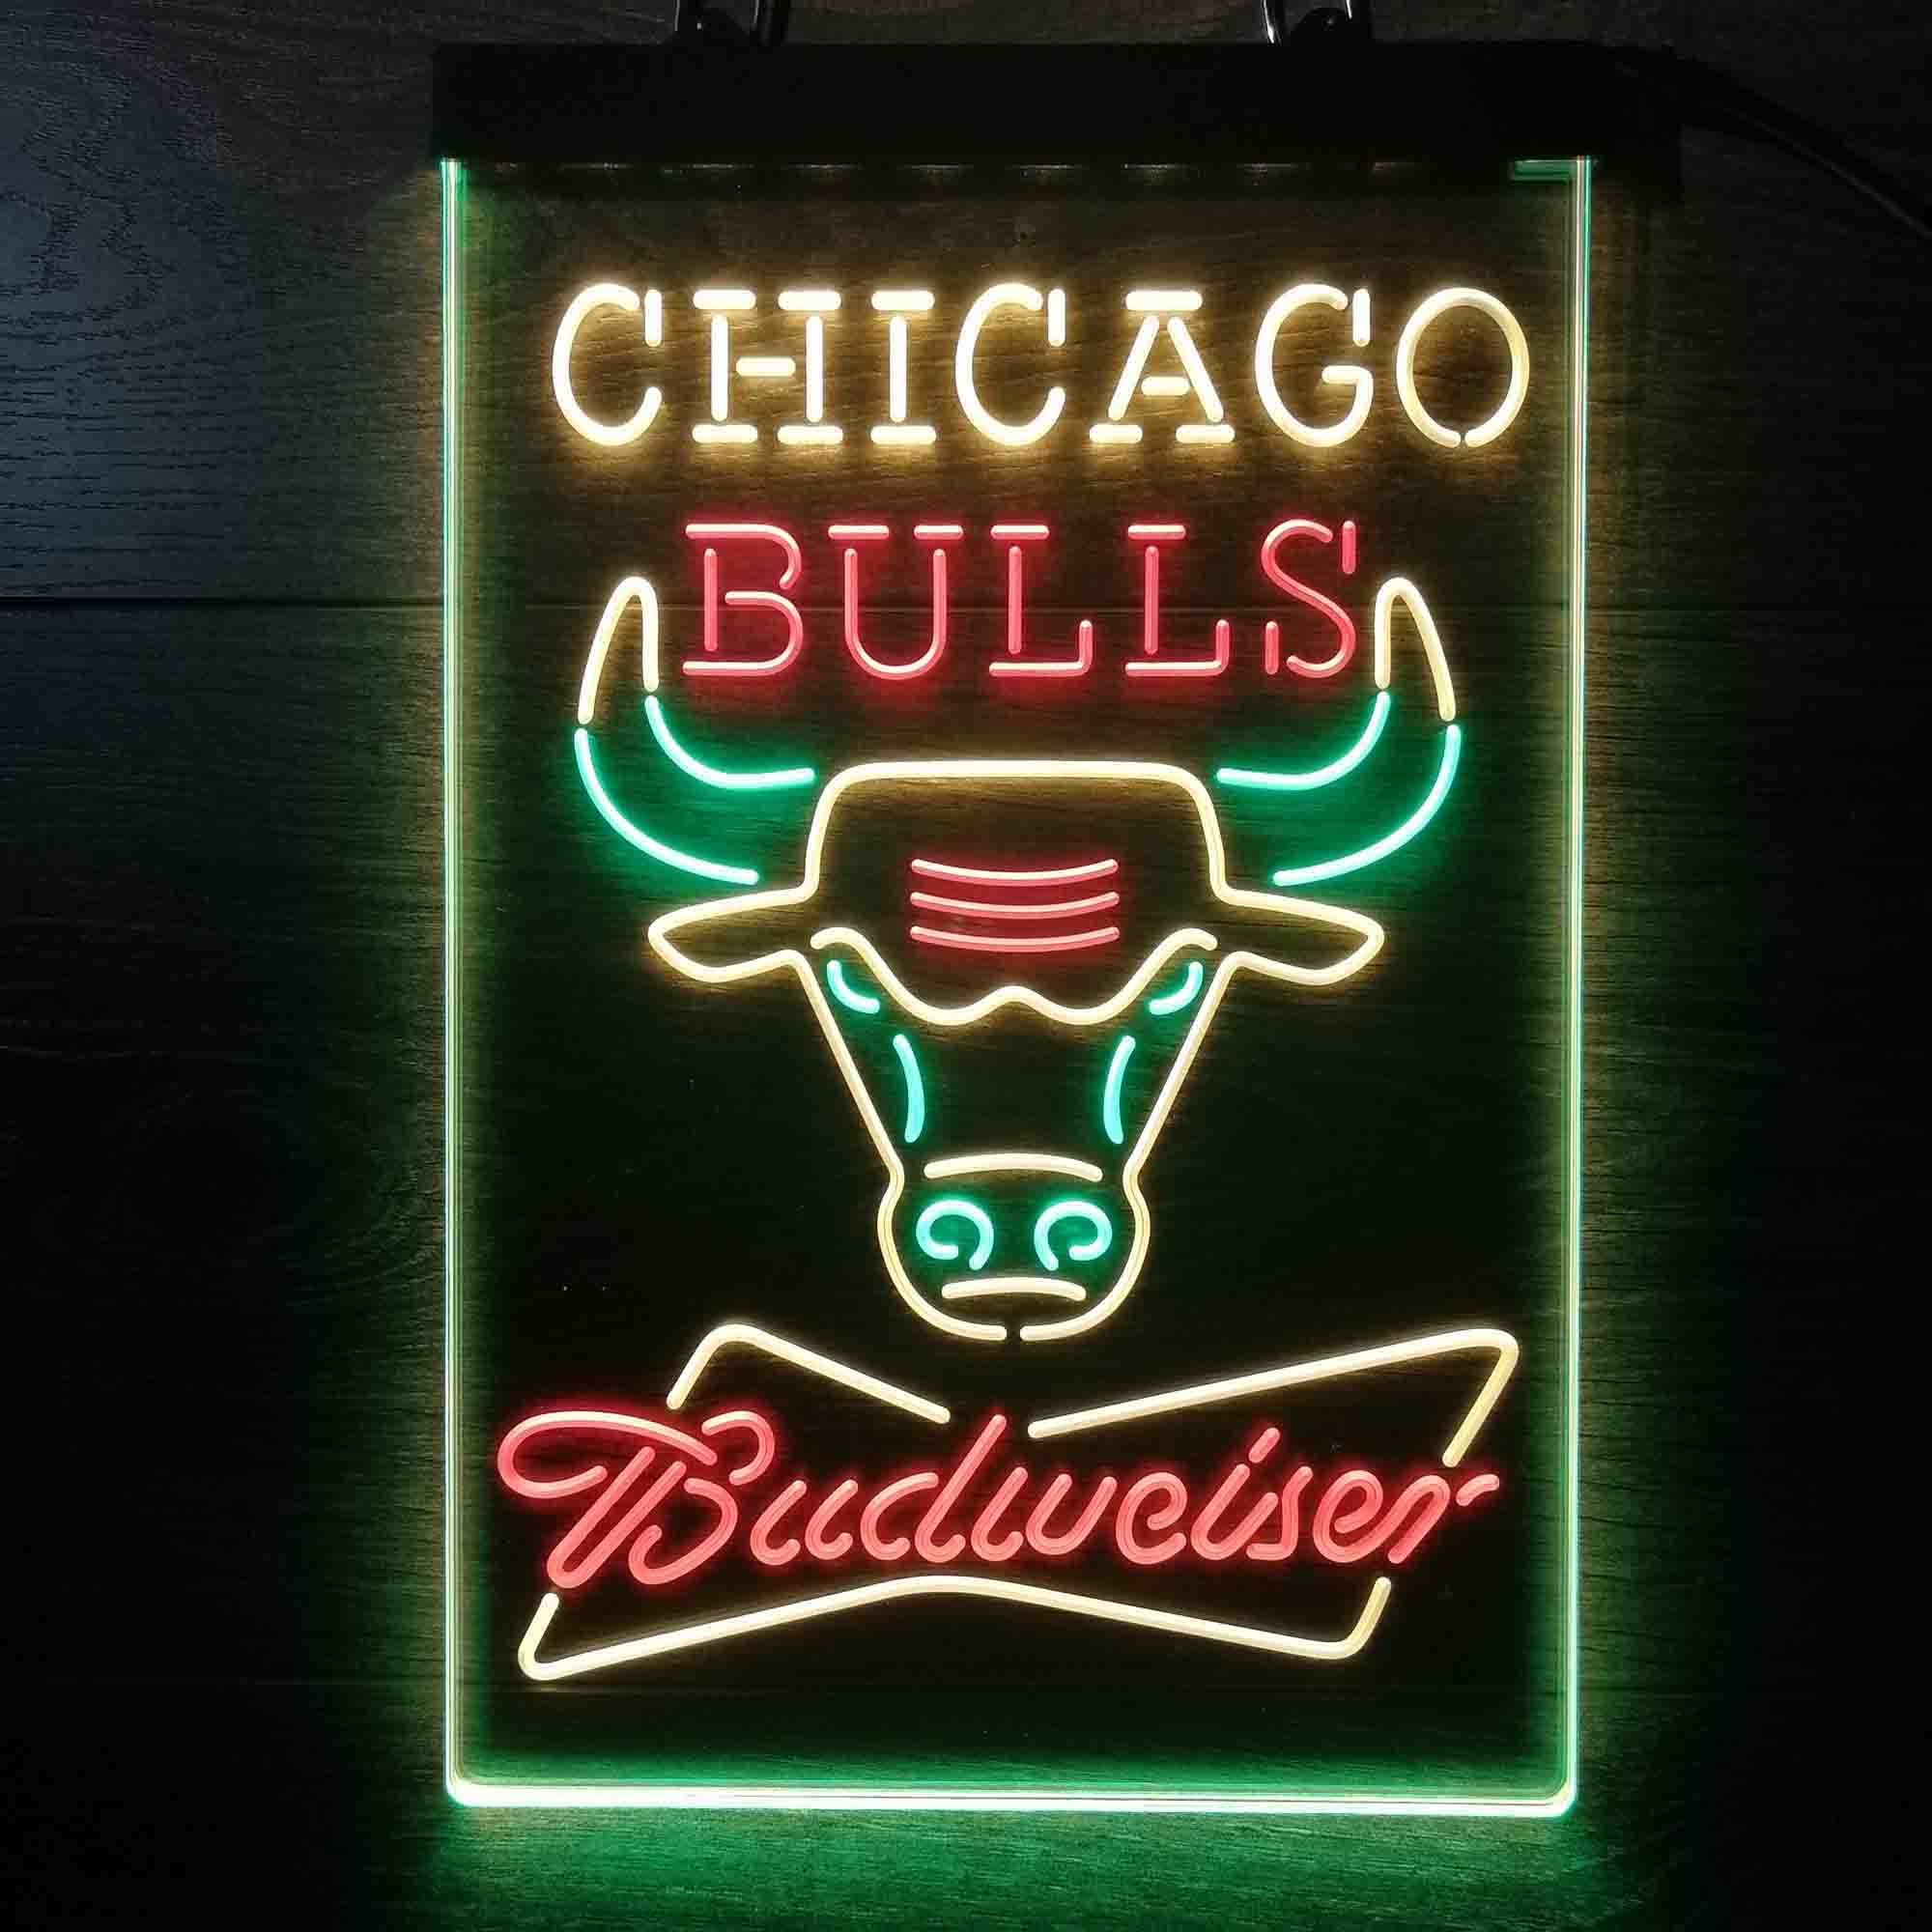 Chicago Bulls Nba Budweiser Neon LED Sign 3 Colors